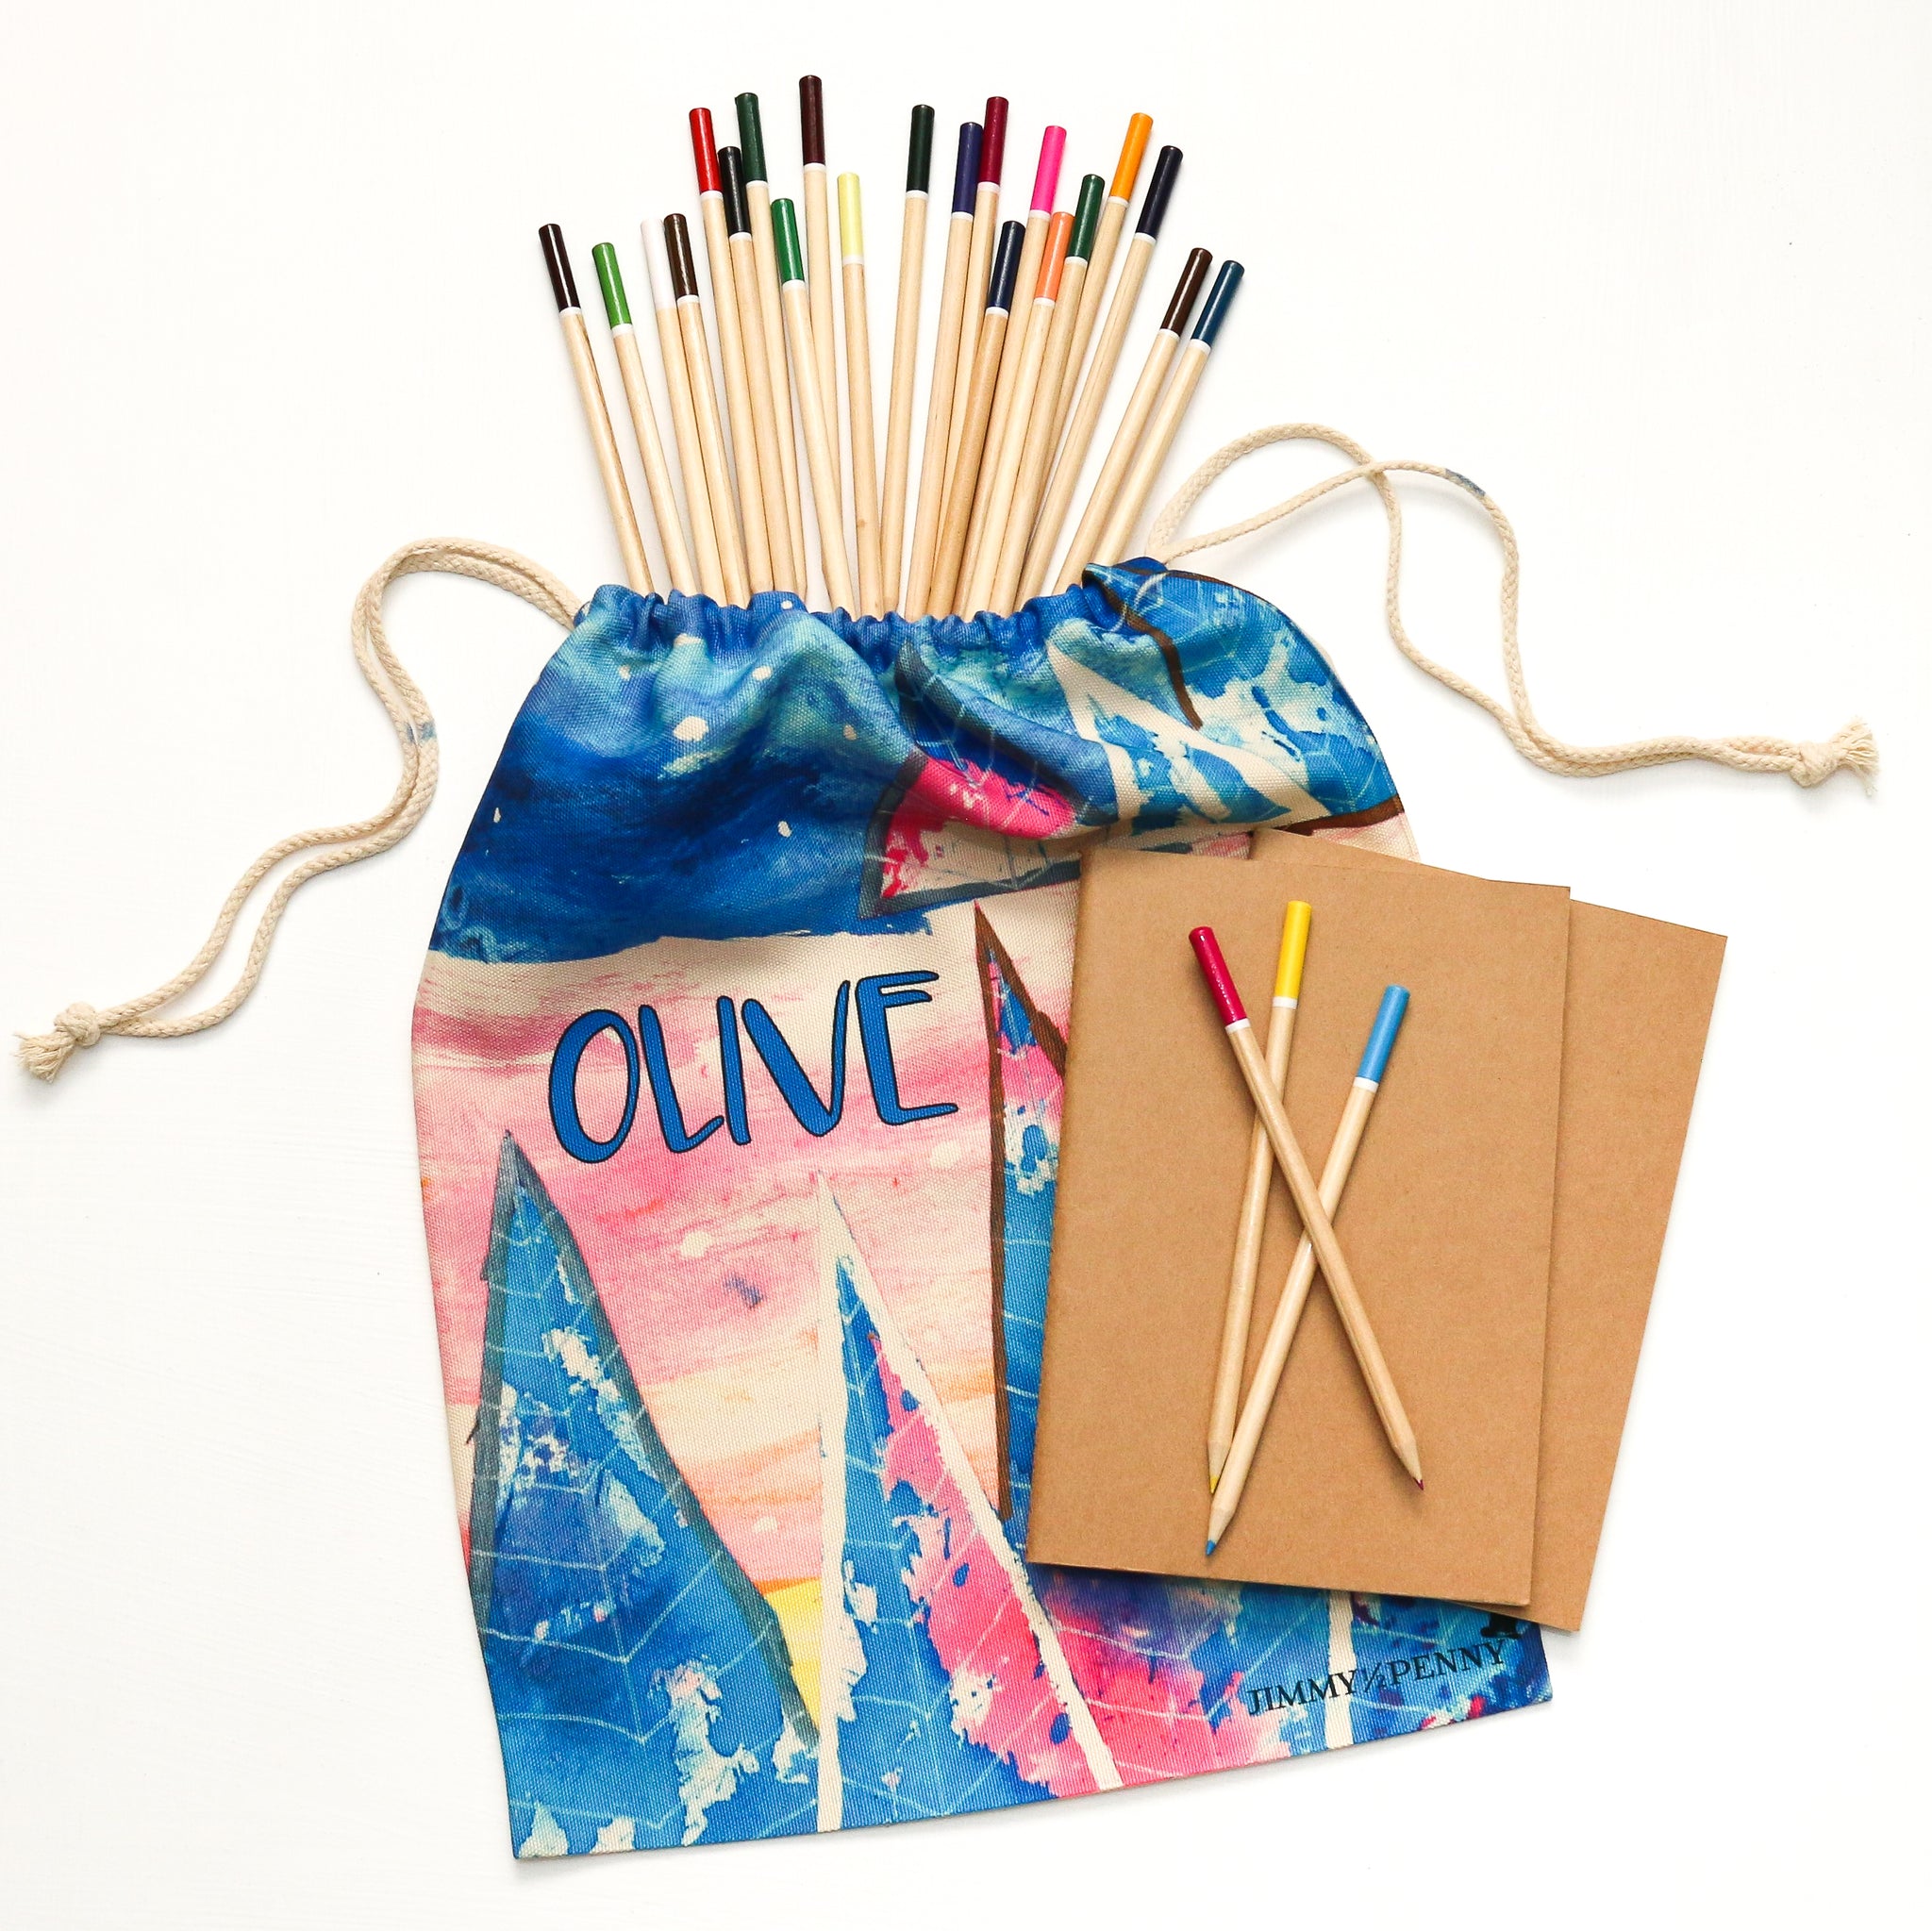 Art For Kids Drawstring Bags for Sale